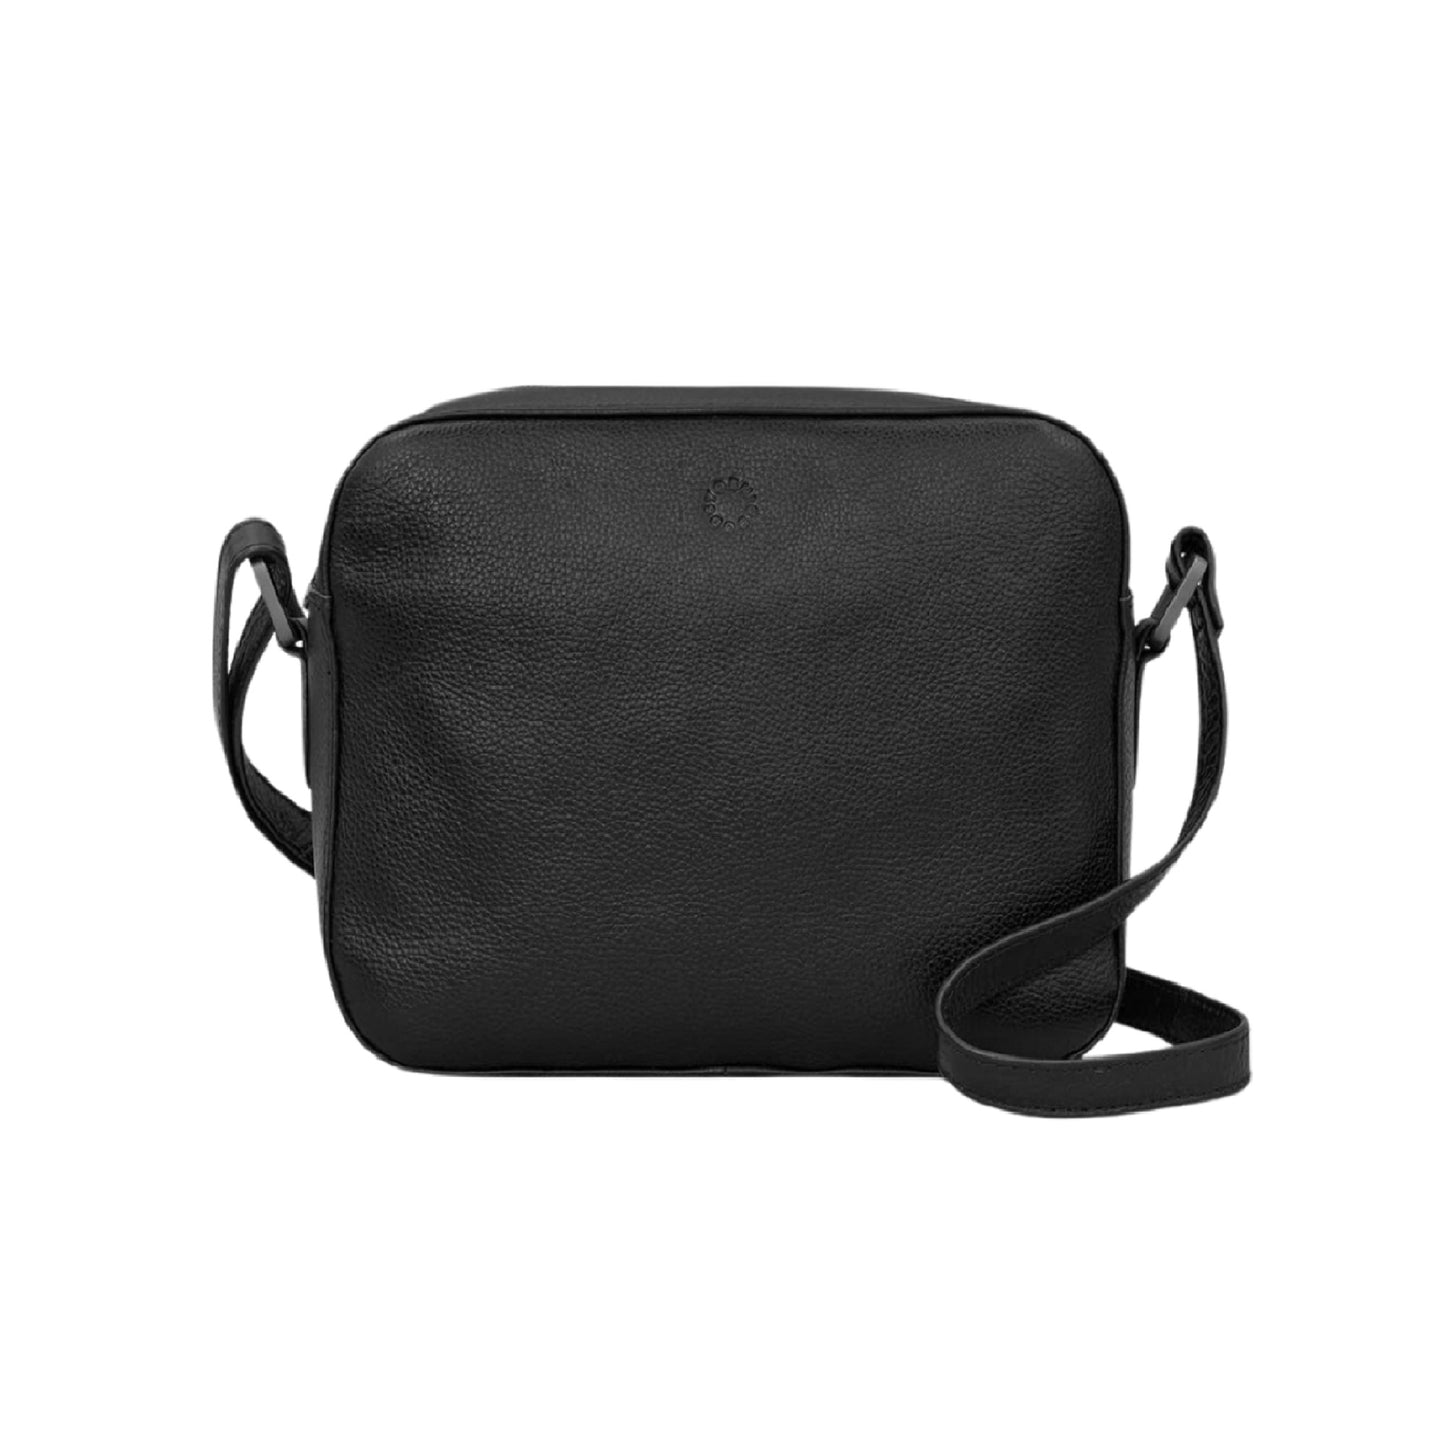 Belmont Leather Crossbody Bag - Black